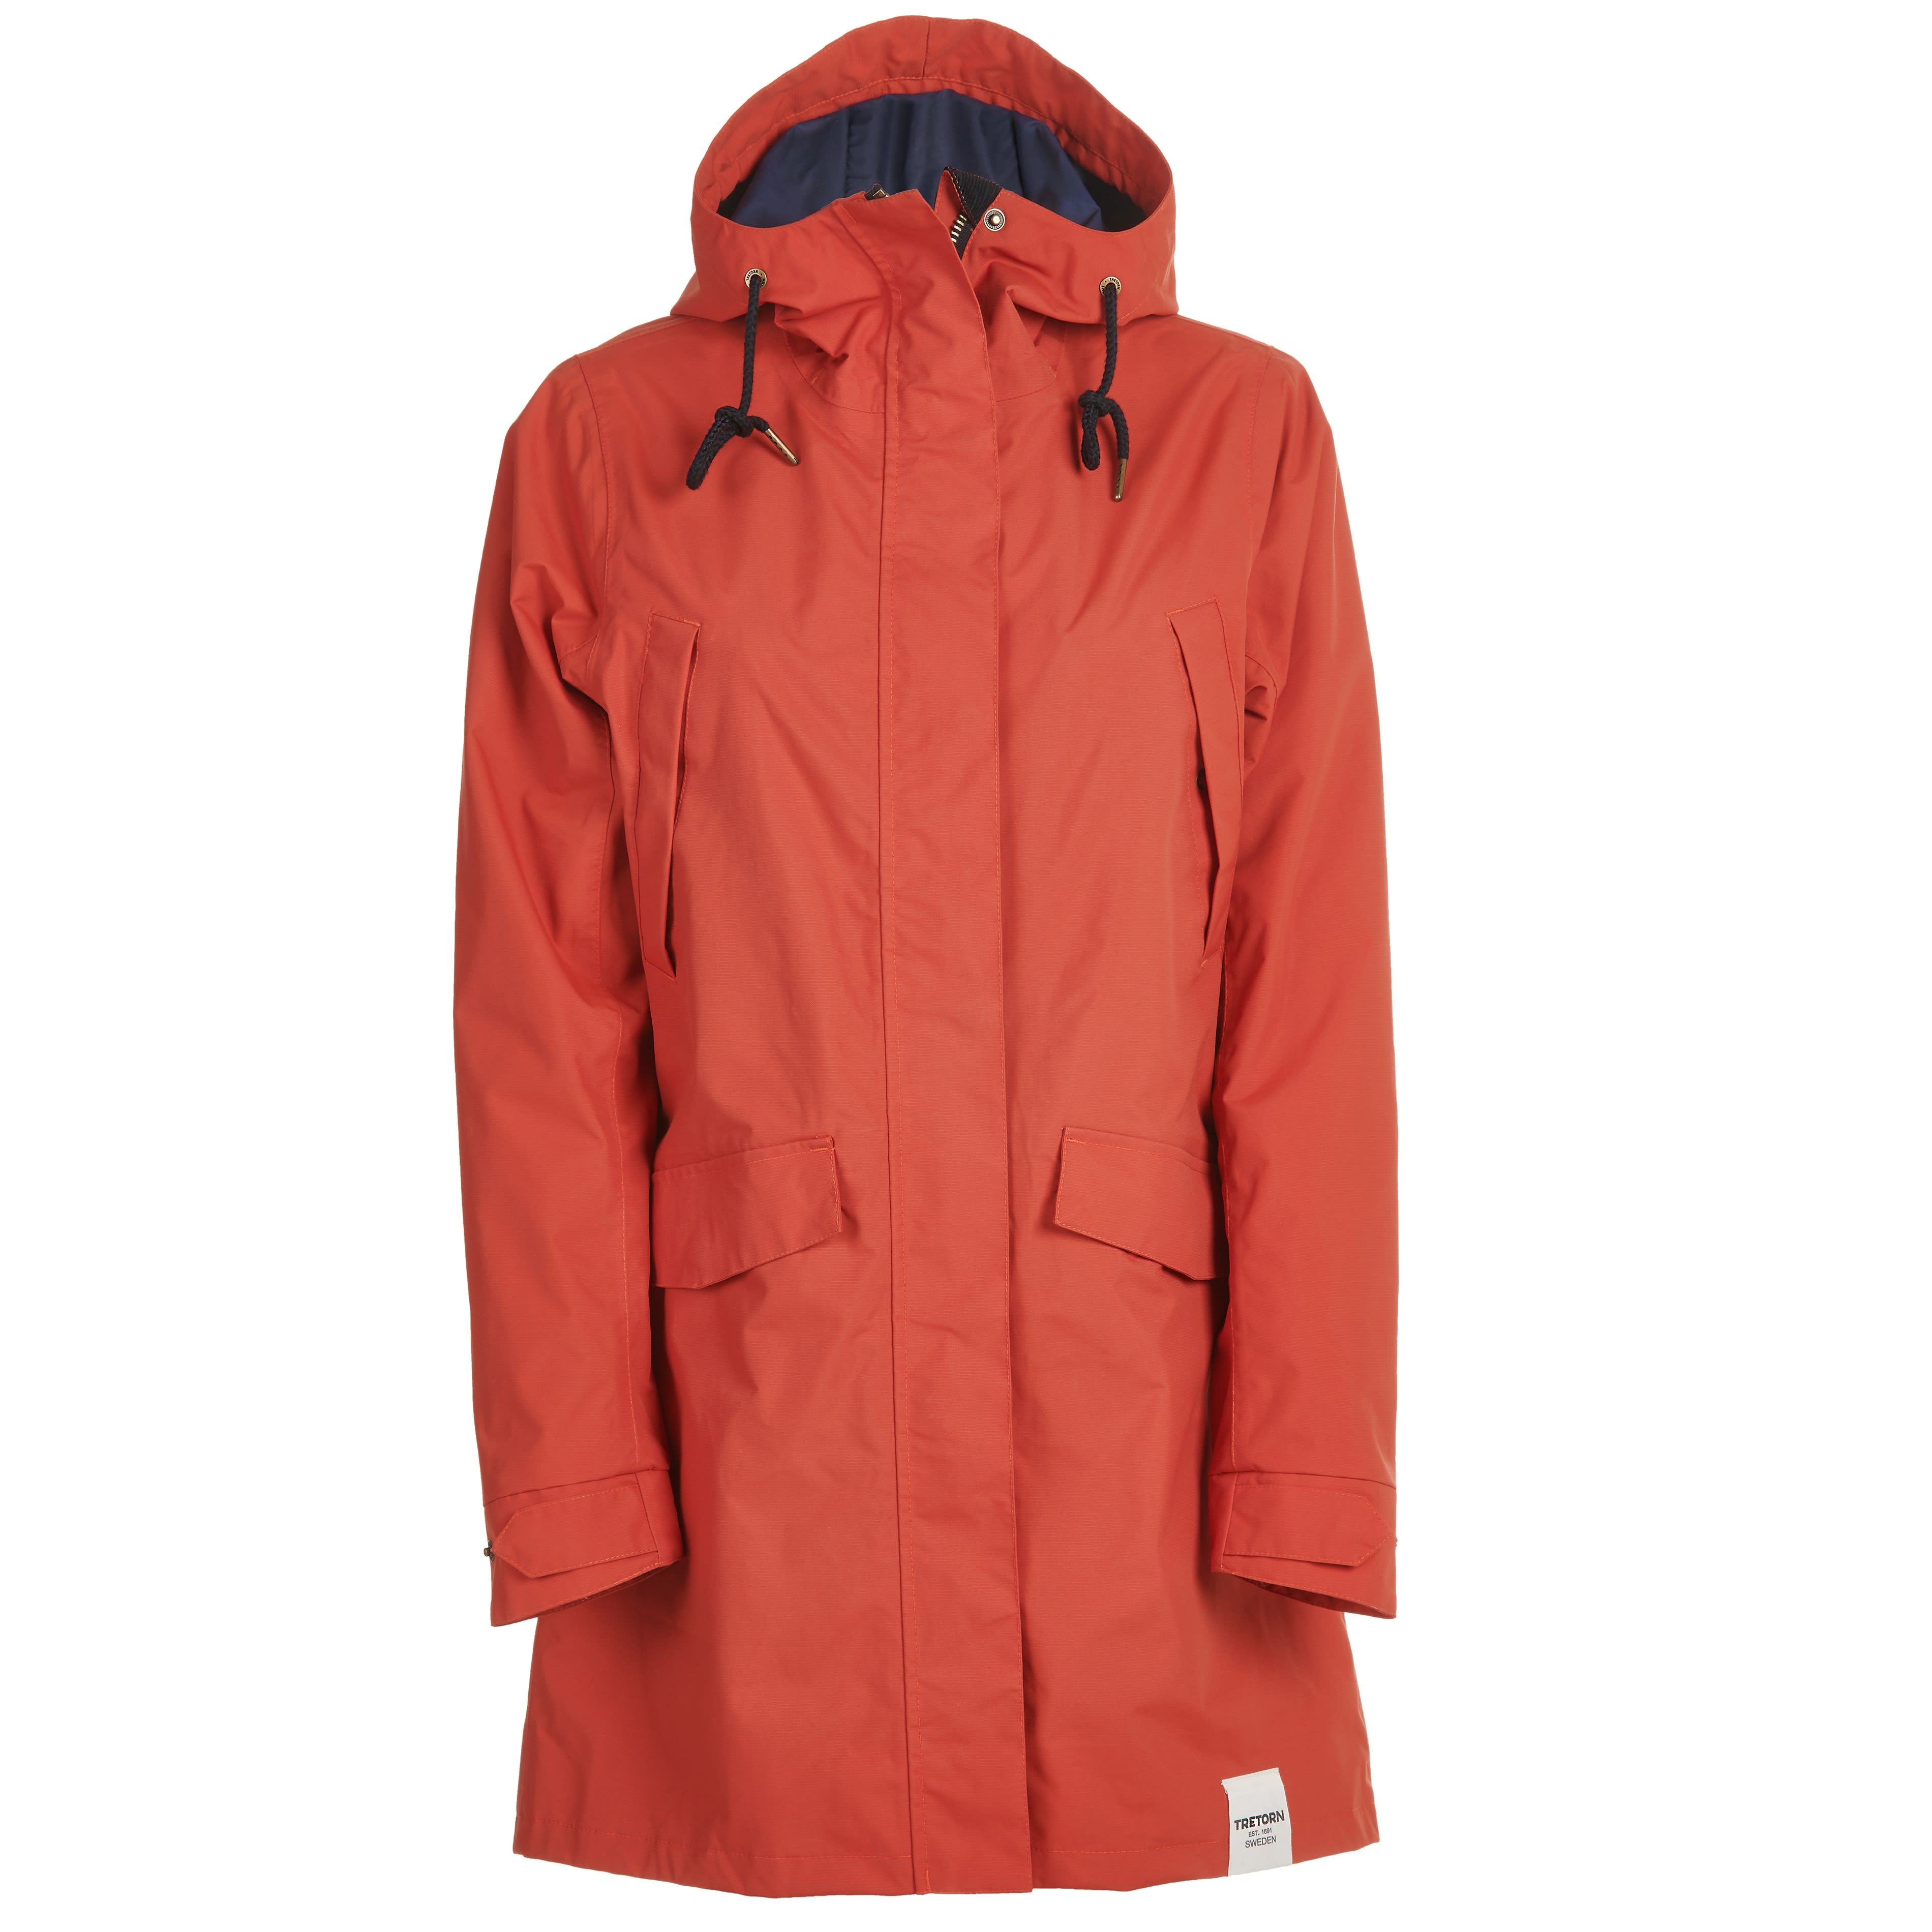 MOUSQUETON PONANT - Women's Winter Waterproof Padded Jacket, Breathable,  Orange Brick, PONANT MOUSQUETON - THE NAUTICAL COMPANY UK